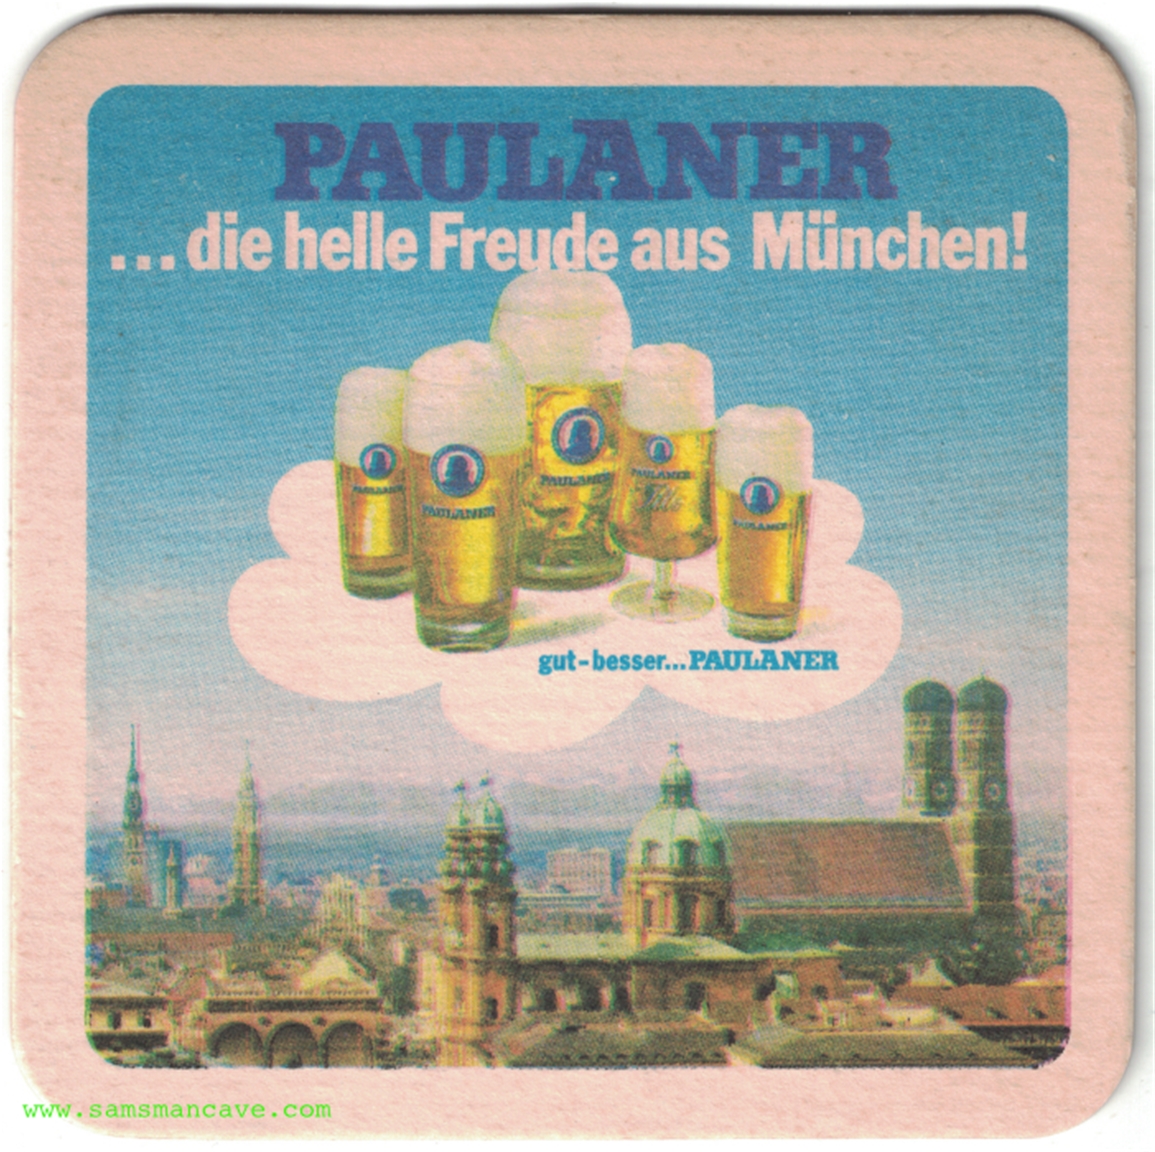 Paulaner Munchen Beer Coaster